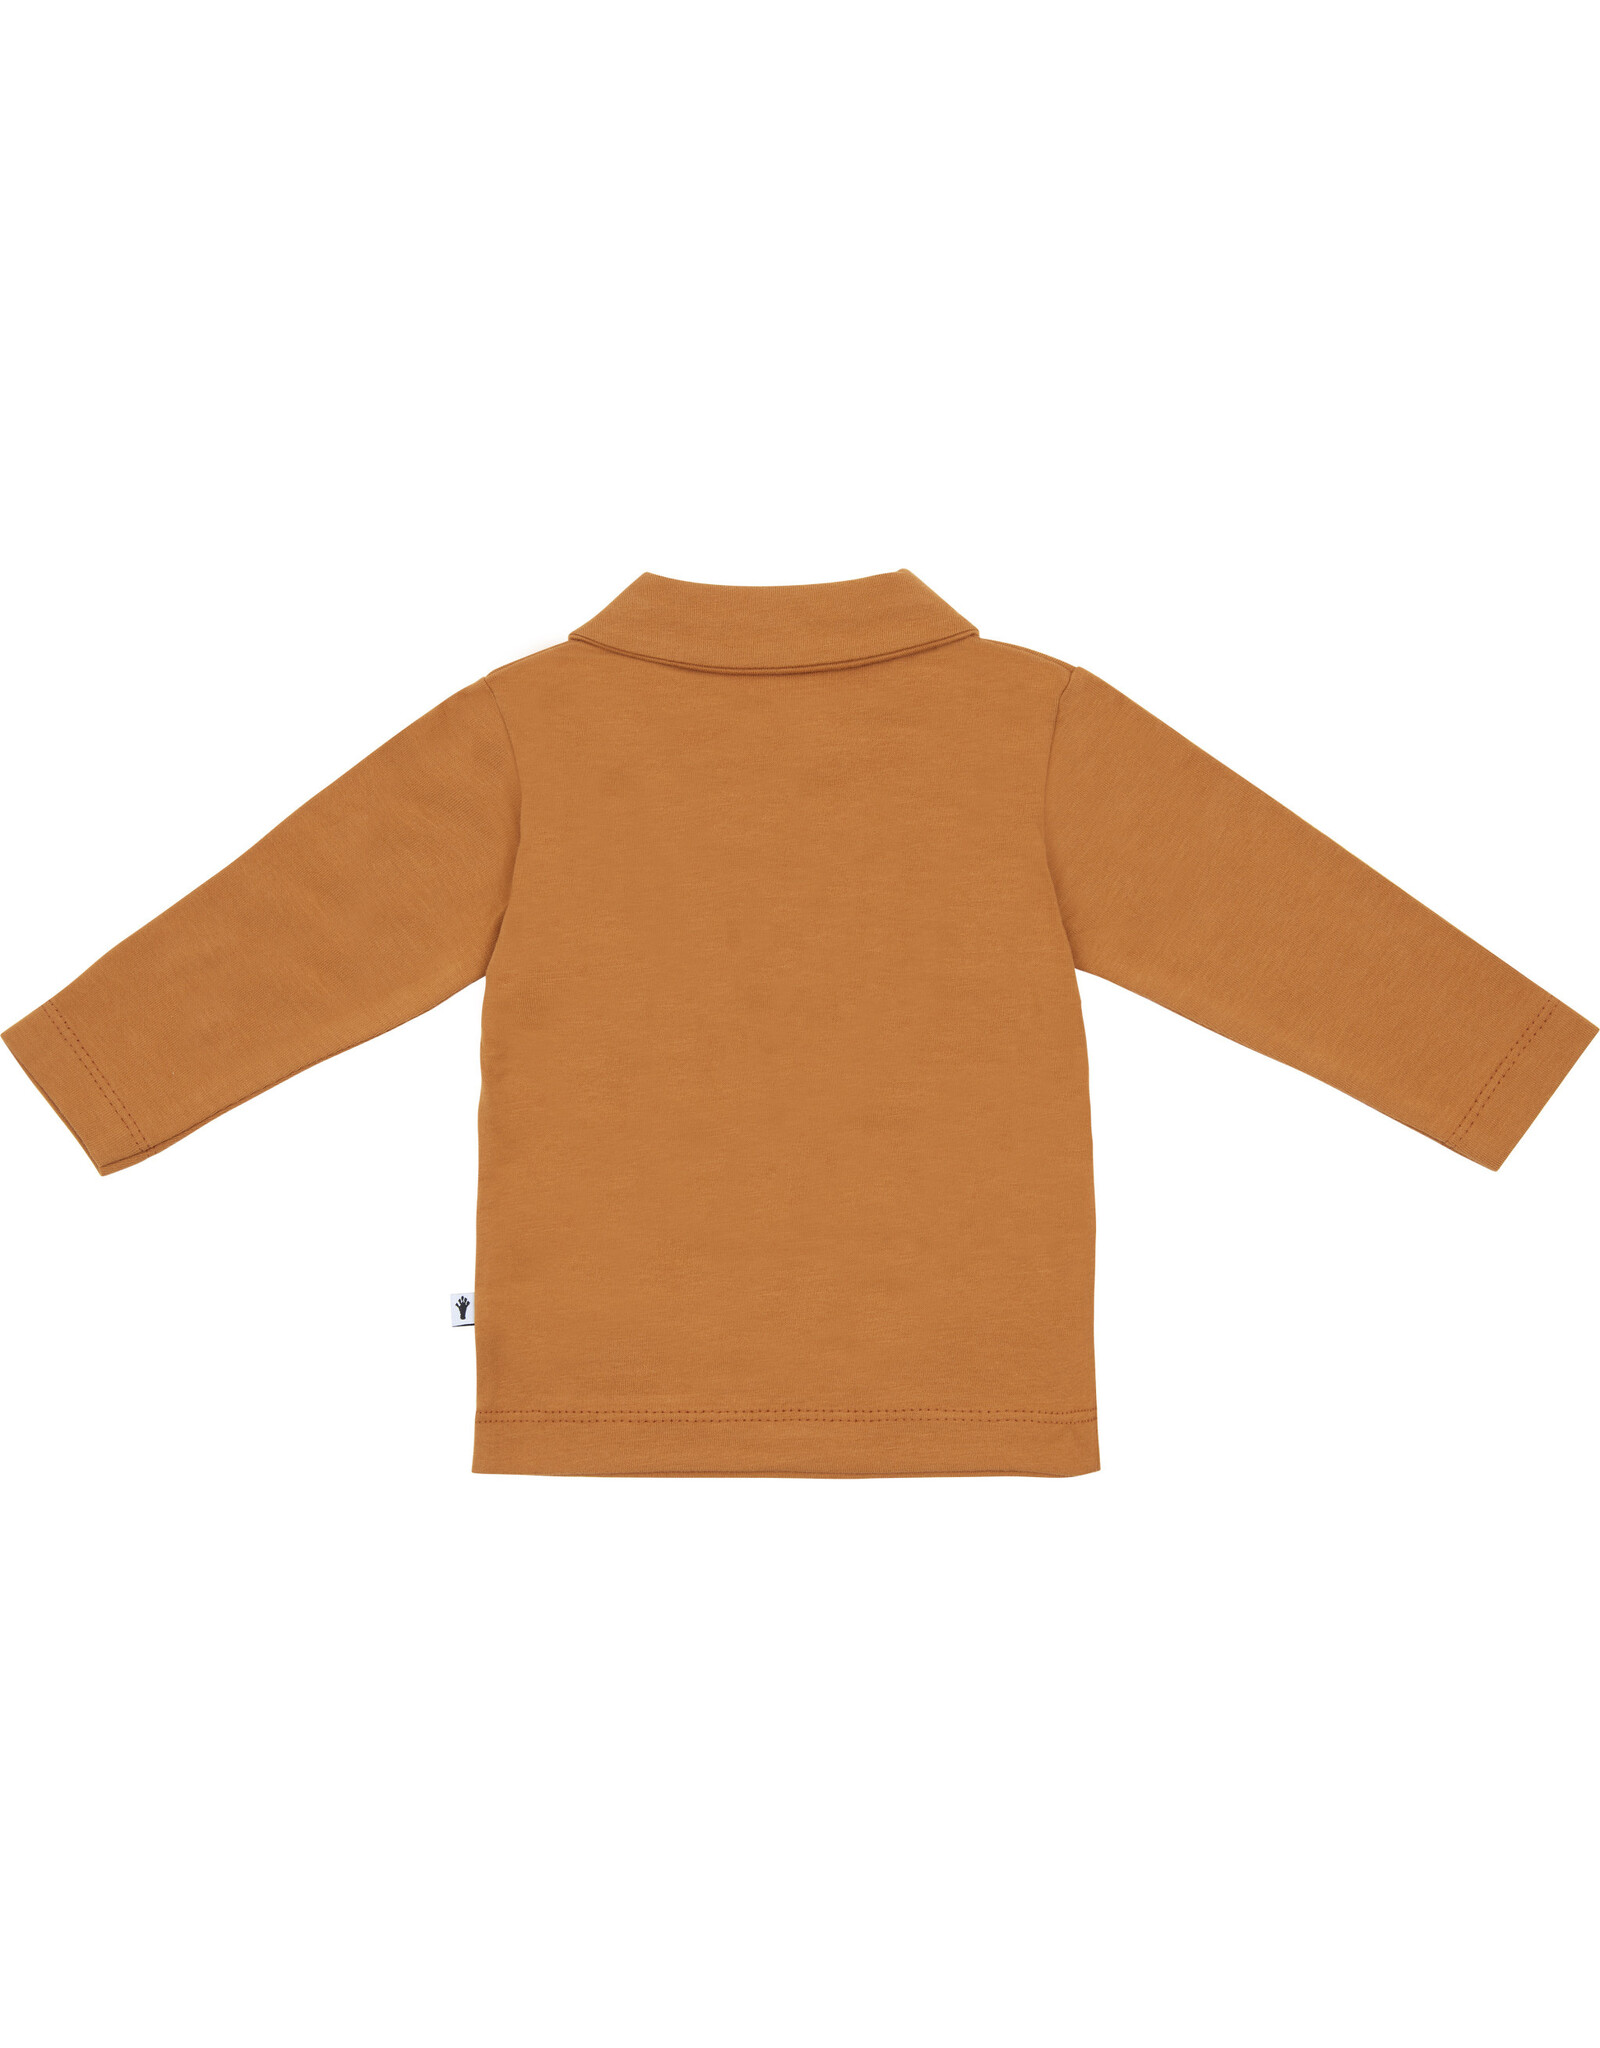 Klein Polo Shirt Sudan Brown